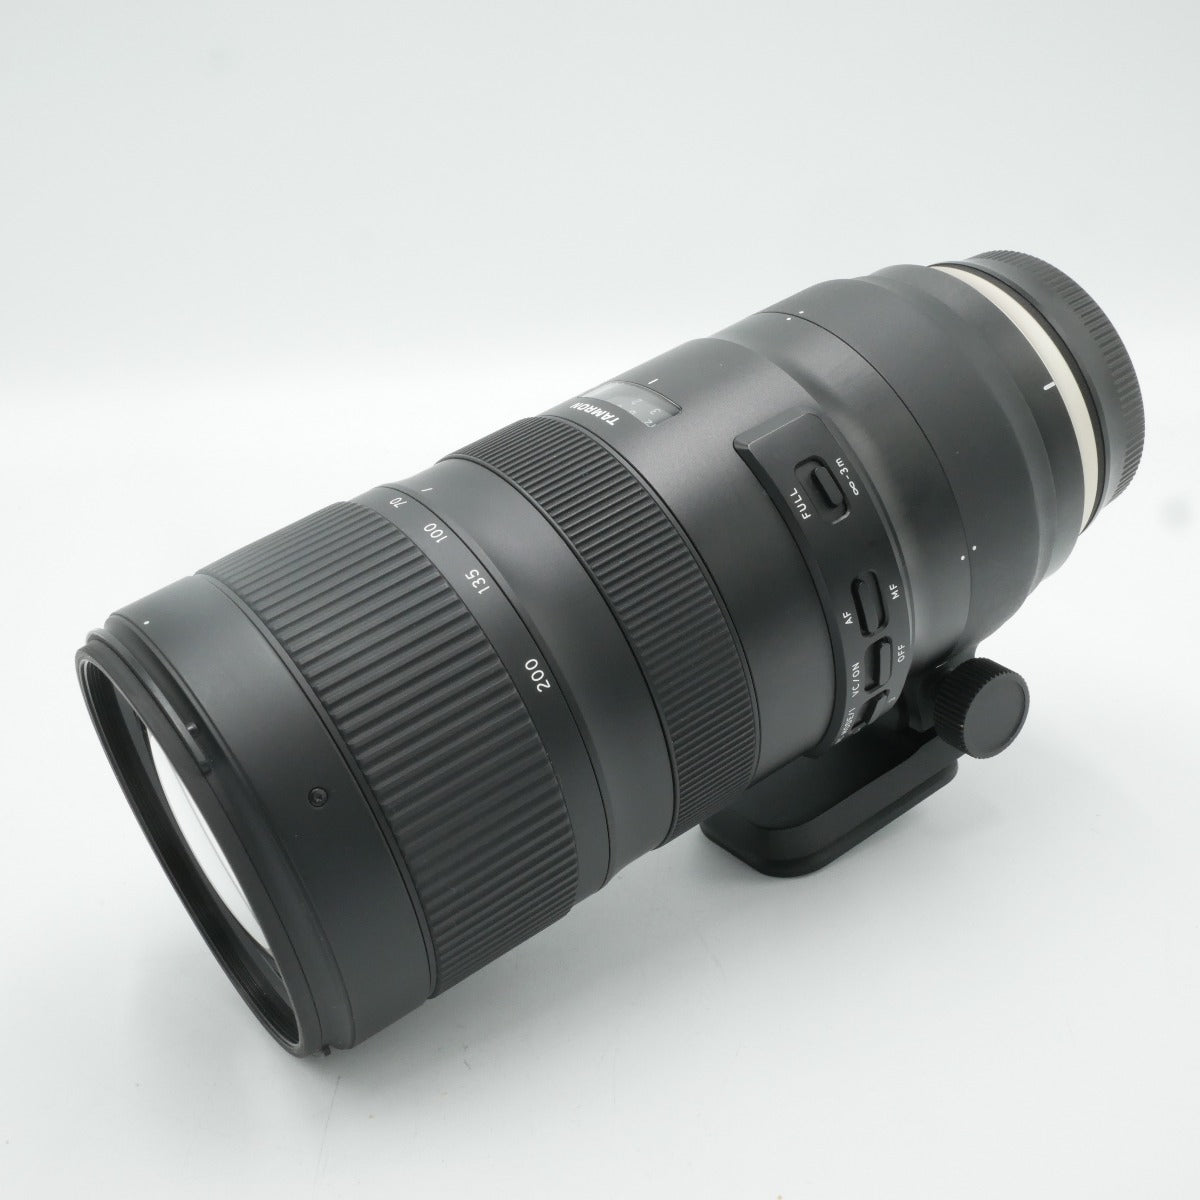 Tamron SP 70-200mm f/2.8 Di VC USD G2 Lens - EF mount